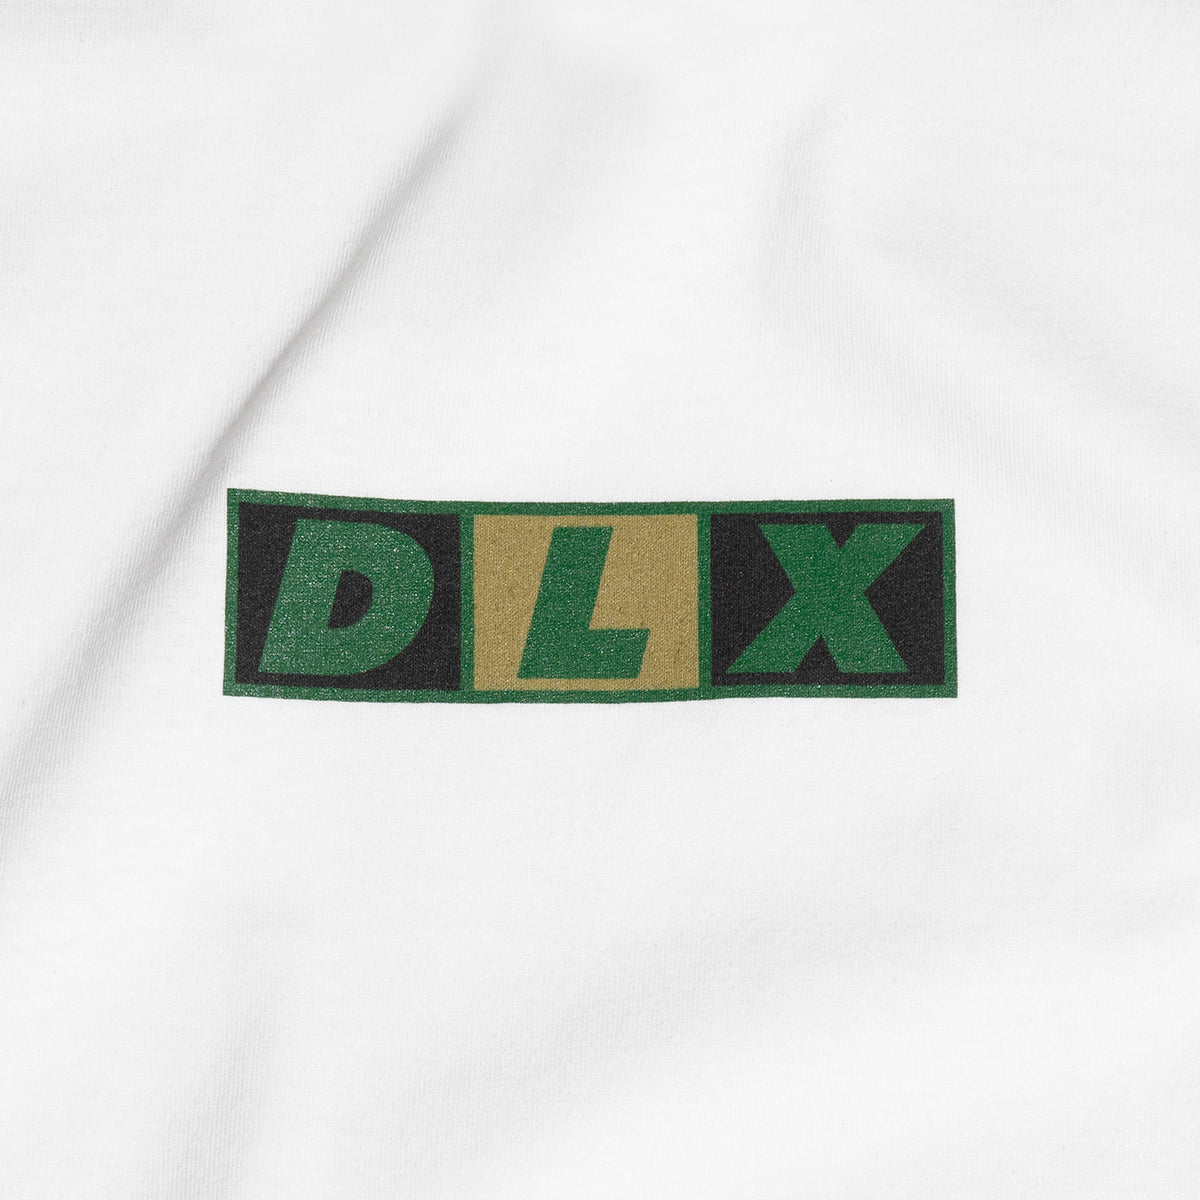 DLX Logo T-Shirt